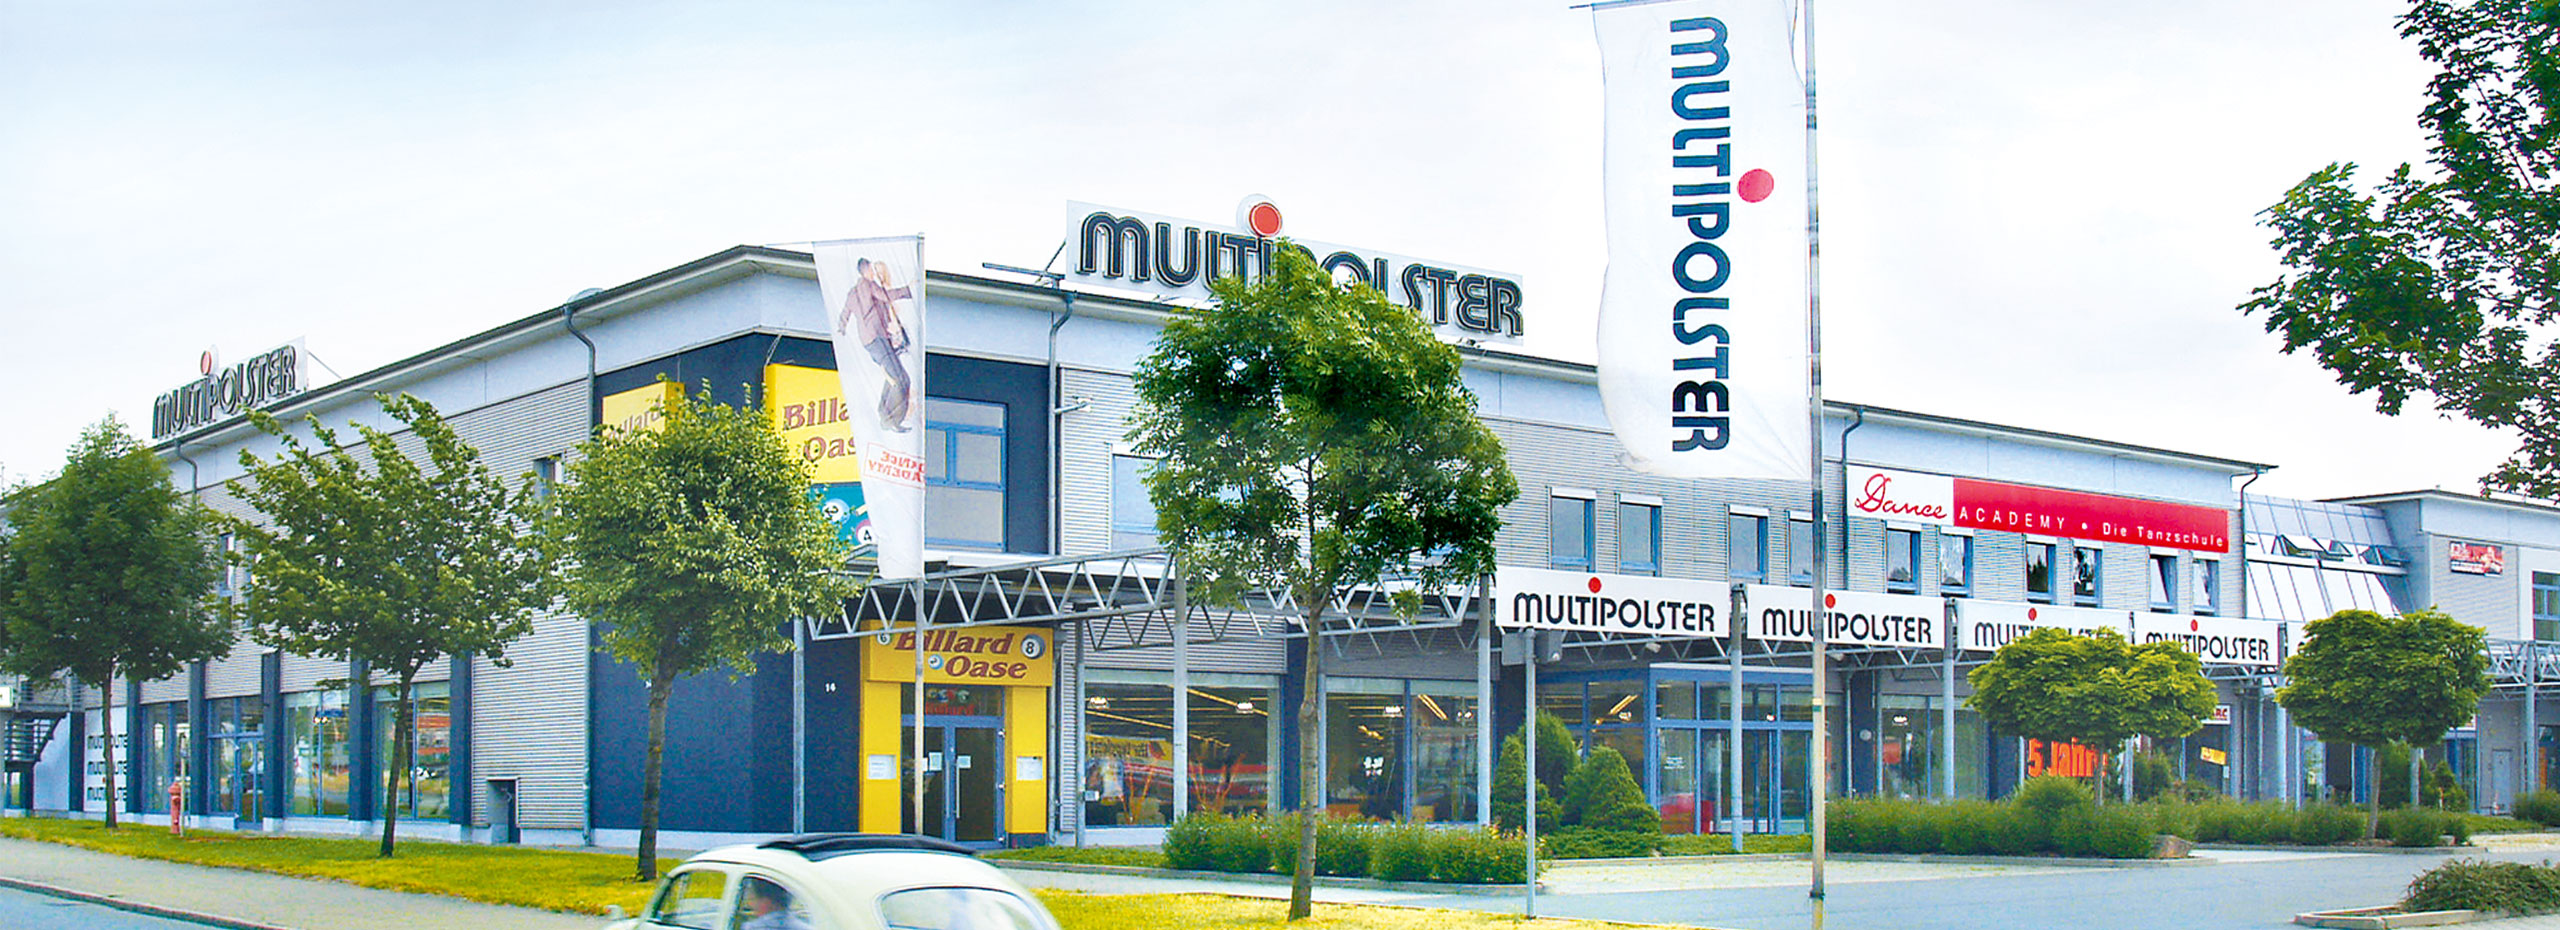 Multipolster - Zwickau